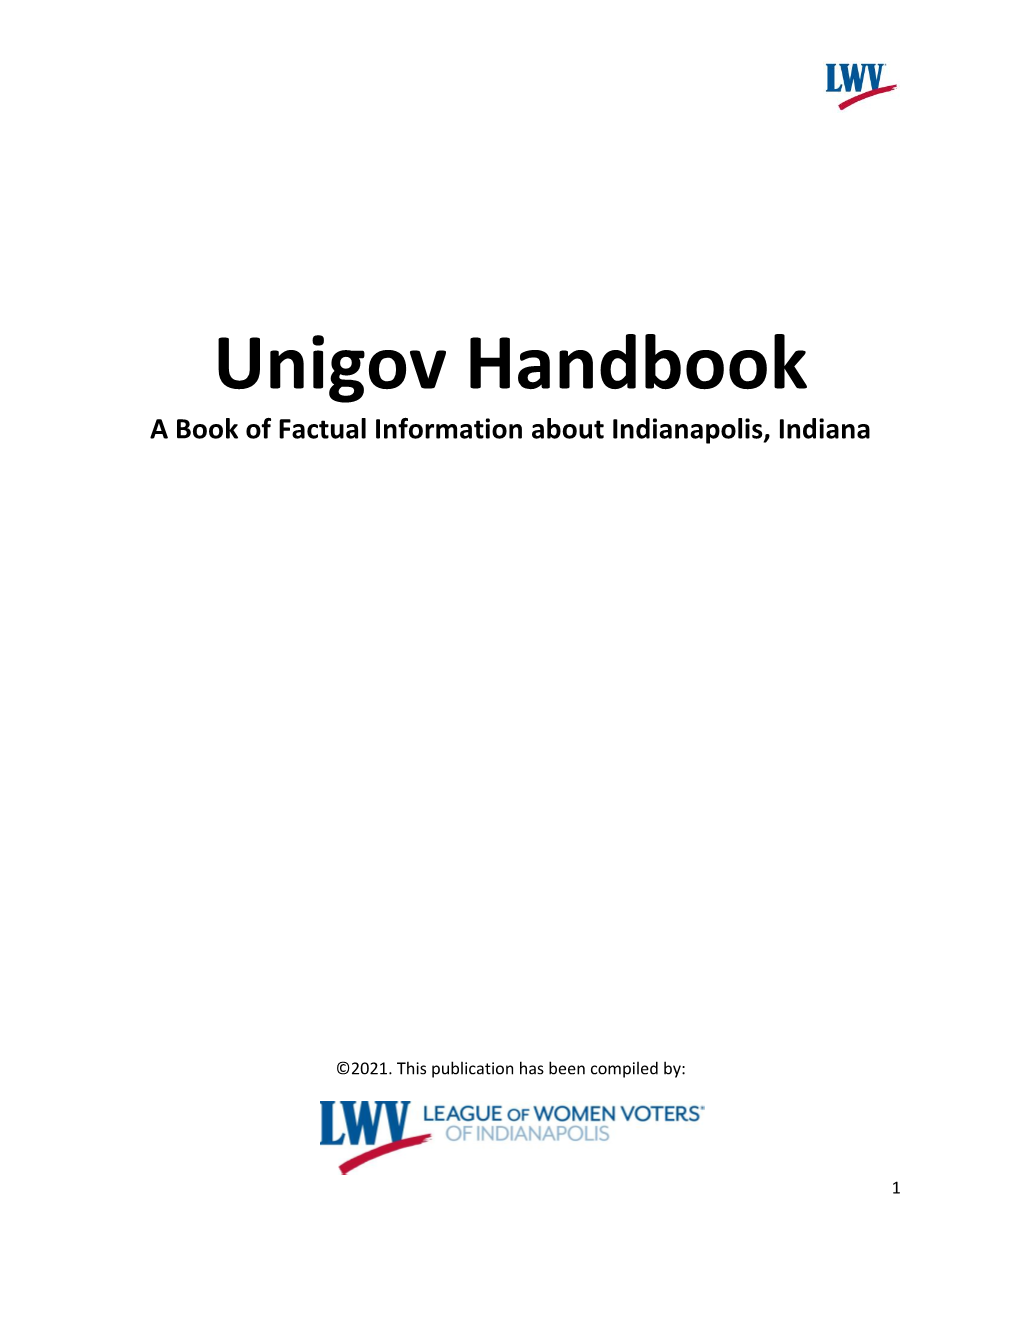 Unigov Handbook a Book of Factual Information About Indianapolis, Indiana